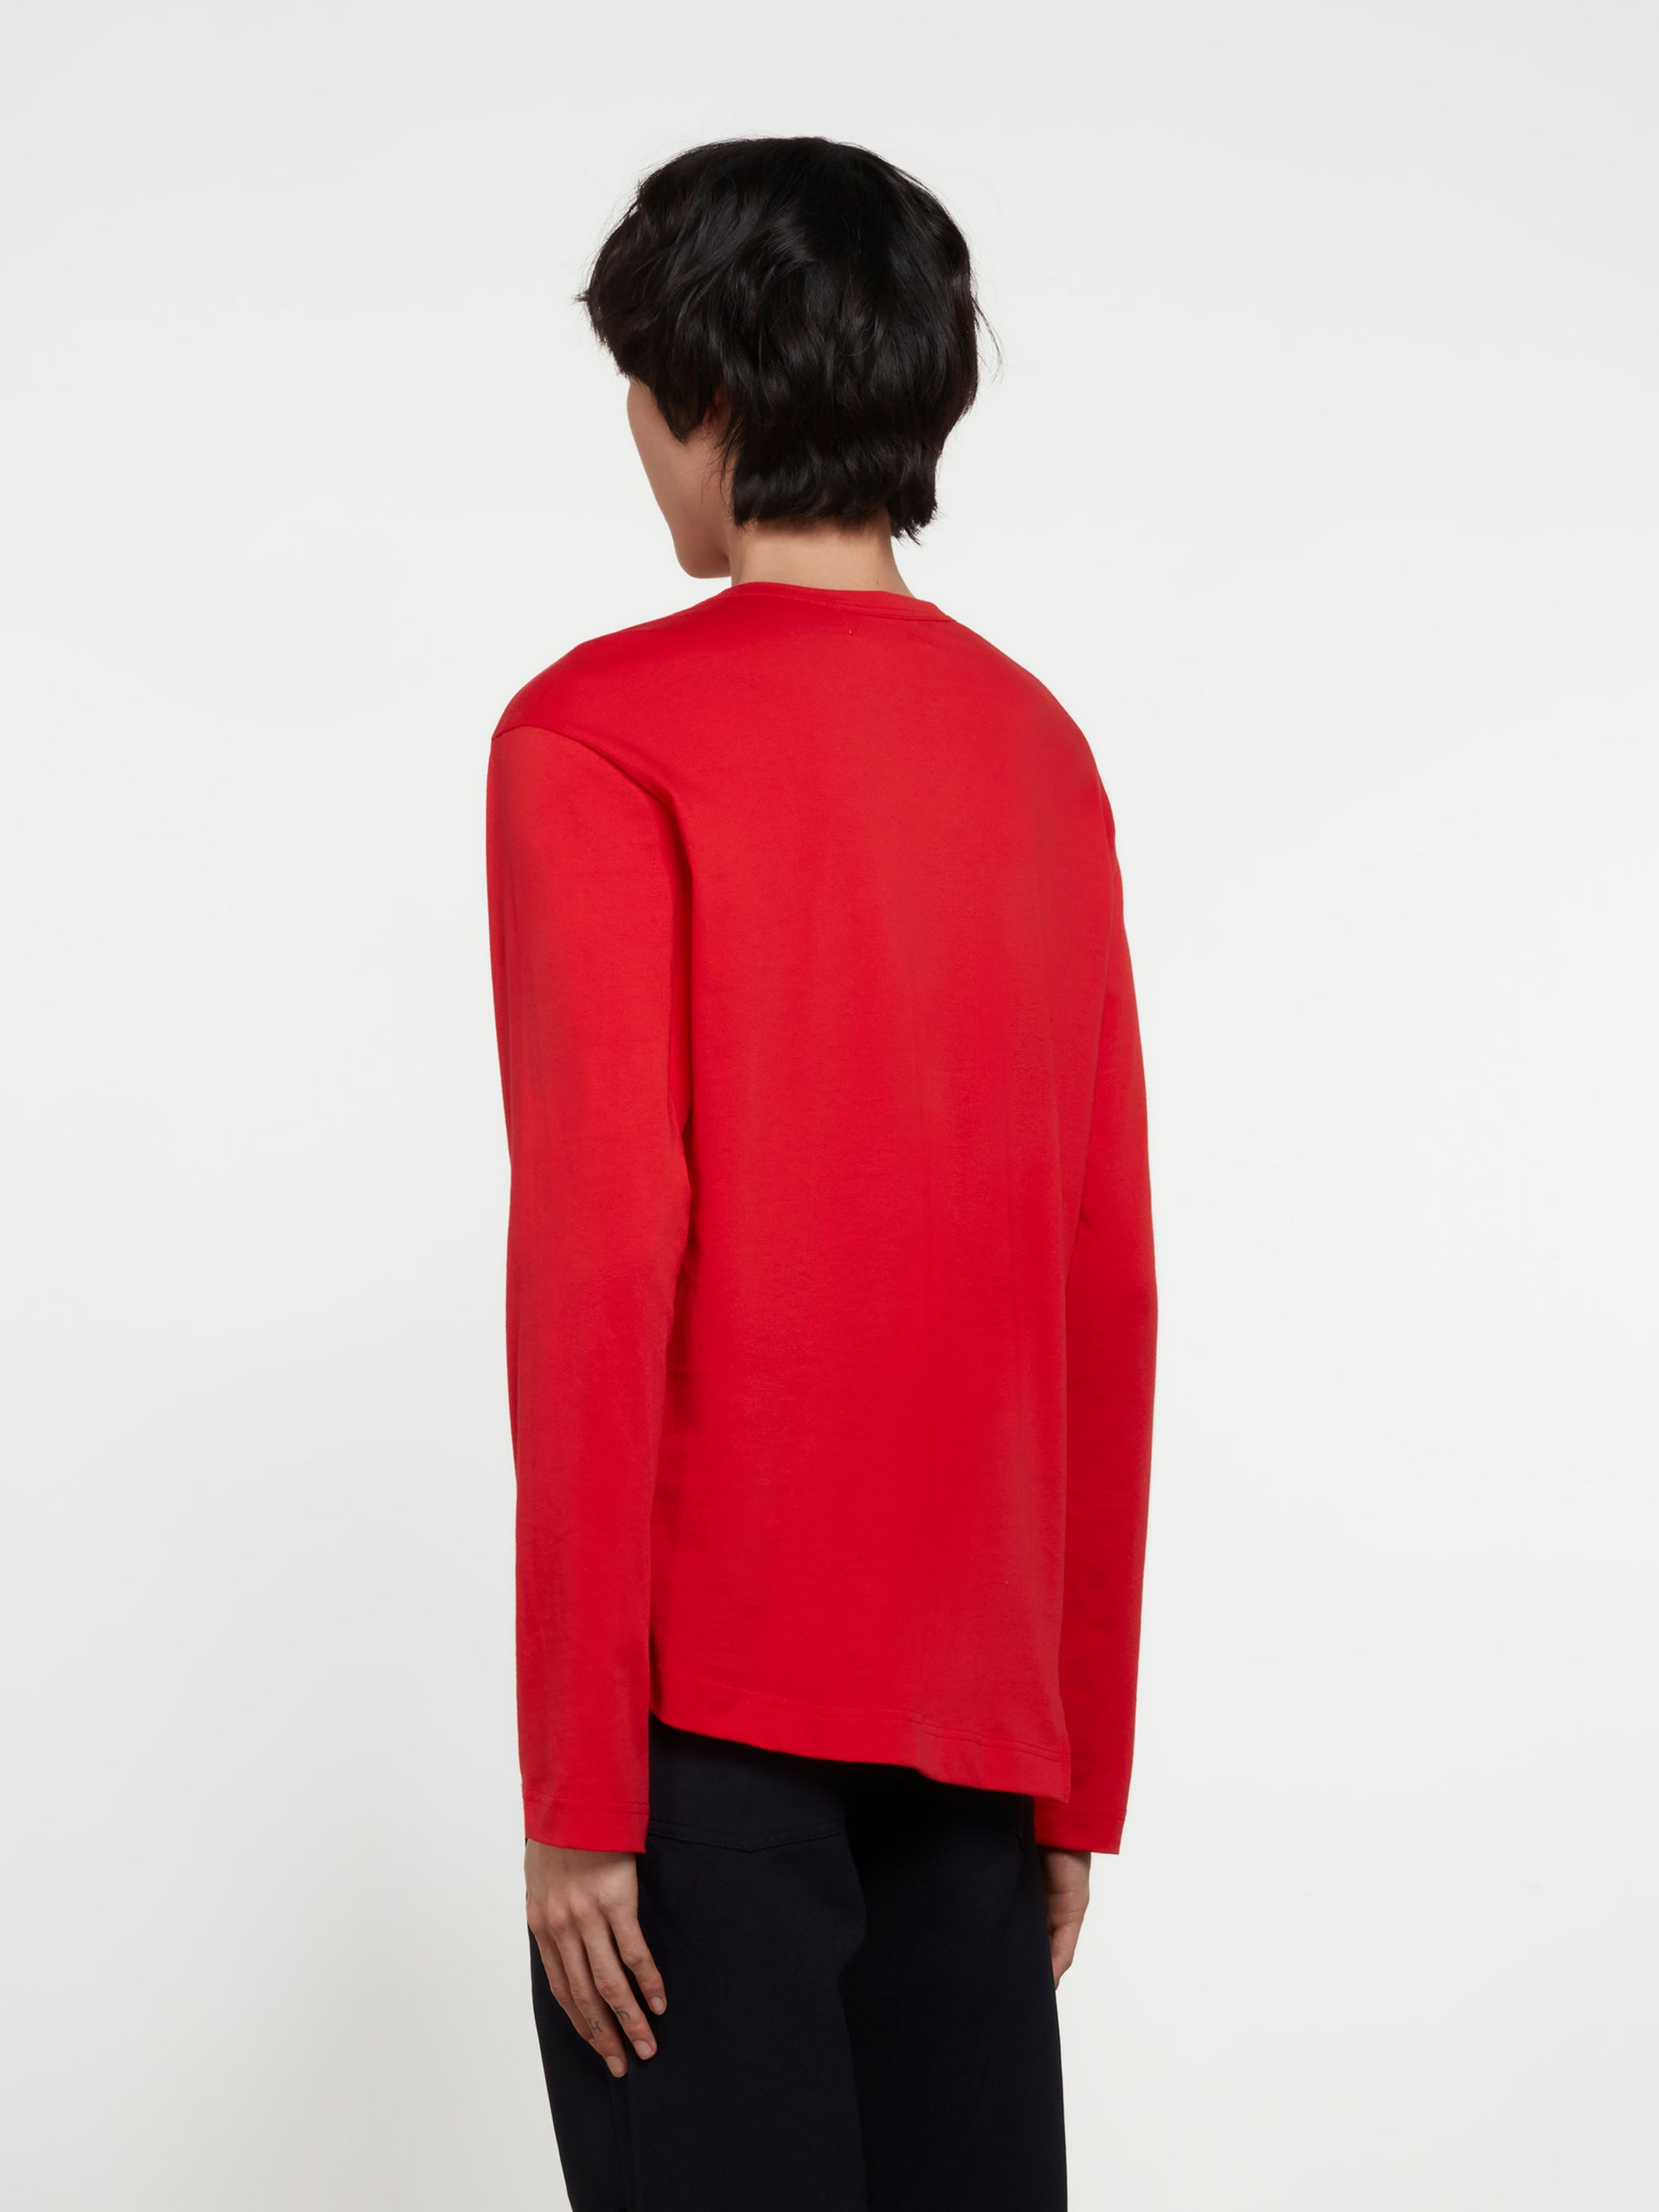 CDG Shirt - Lacoste Men’s Long Sleeve T-Shirt - (Red) view 3